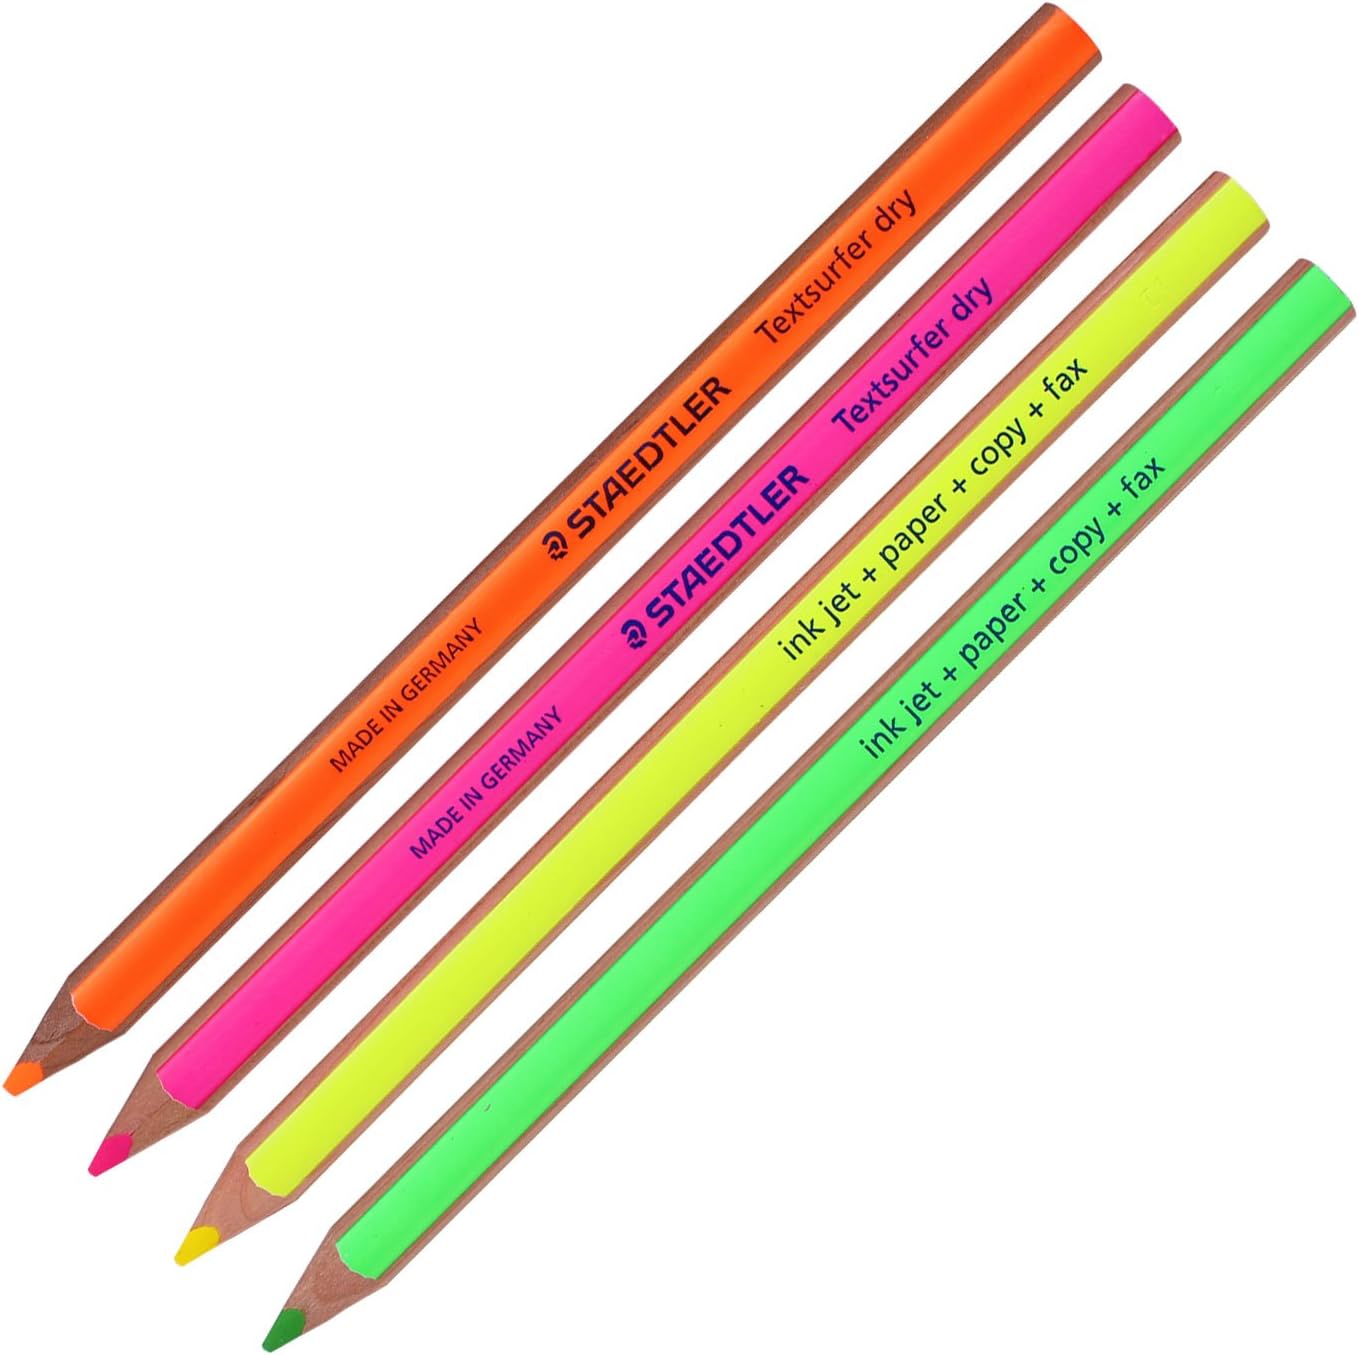 Staedtler: Textsurfer Dry Highlighter Pencil